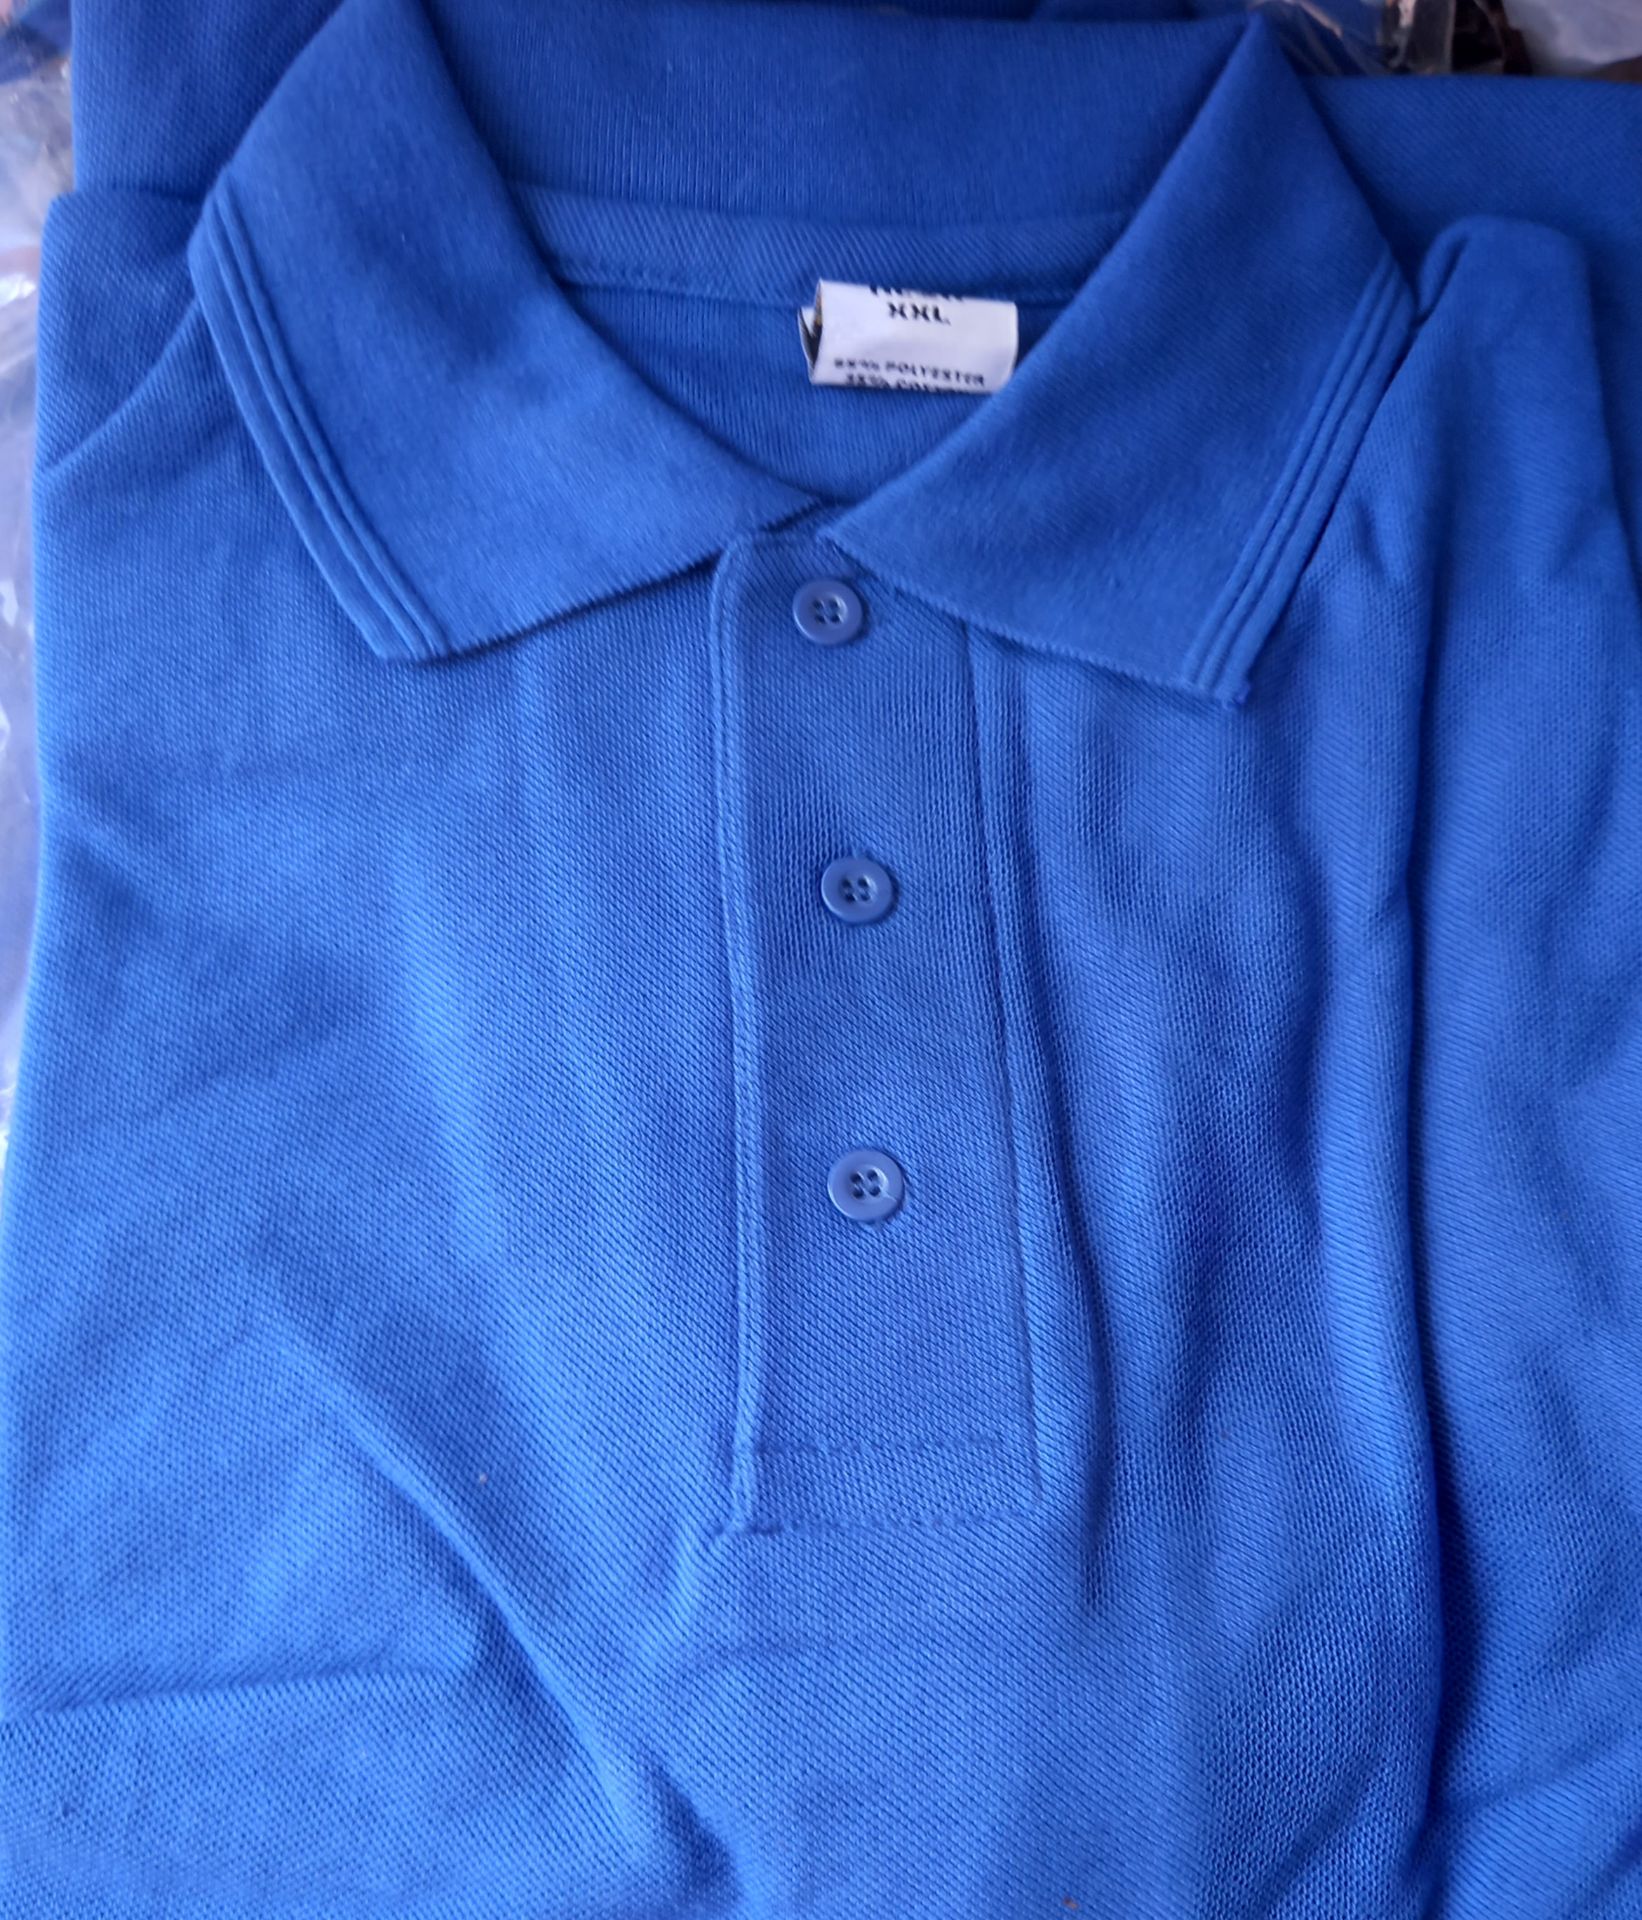 6 brand new xxl blue polo shirts